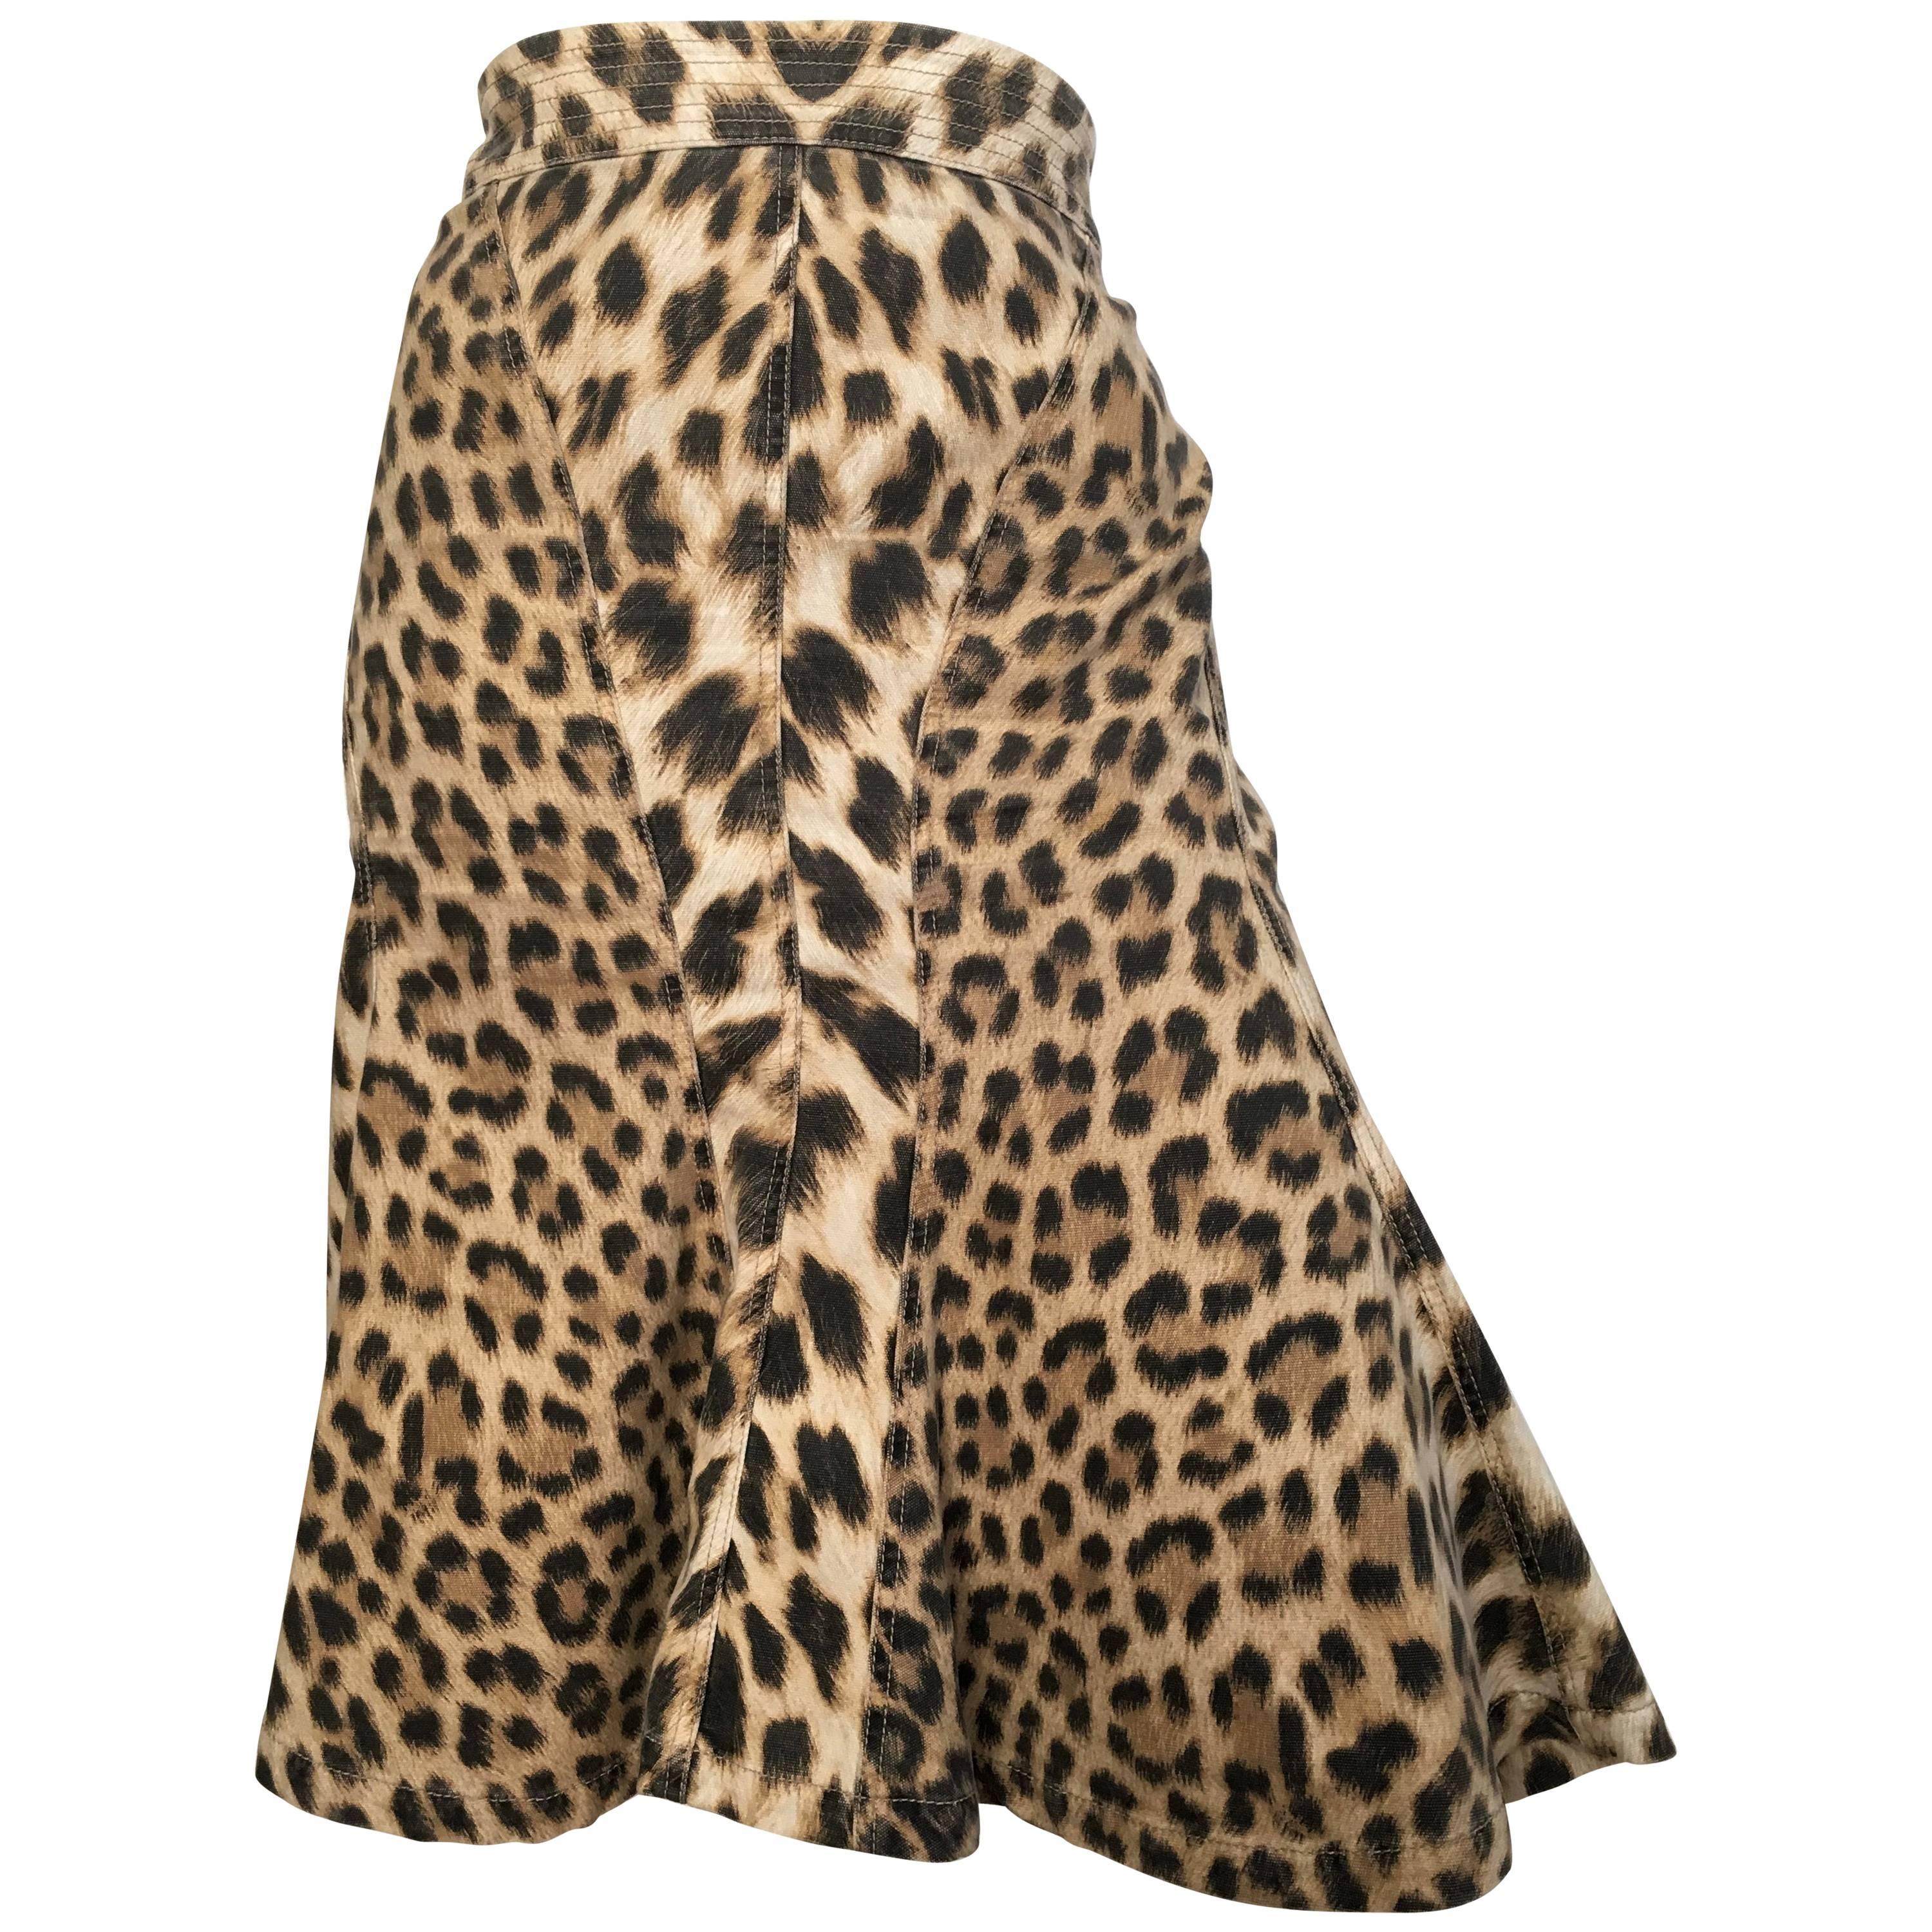 Roberto Cavalli Cotton Leopard Print Skirt Size 10. For Sale